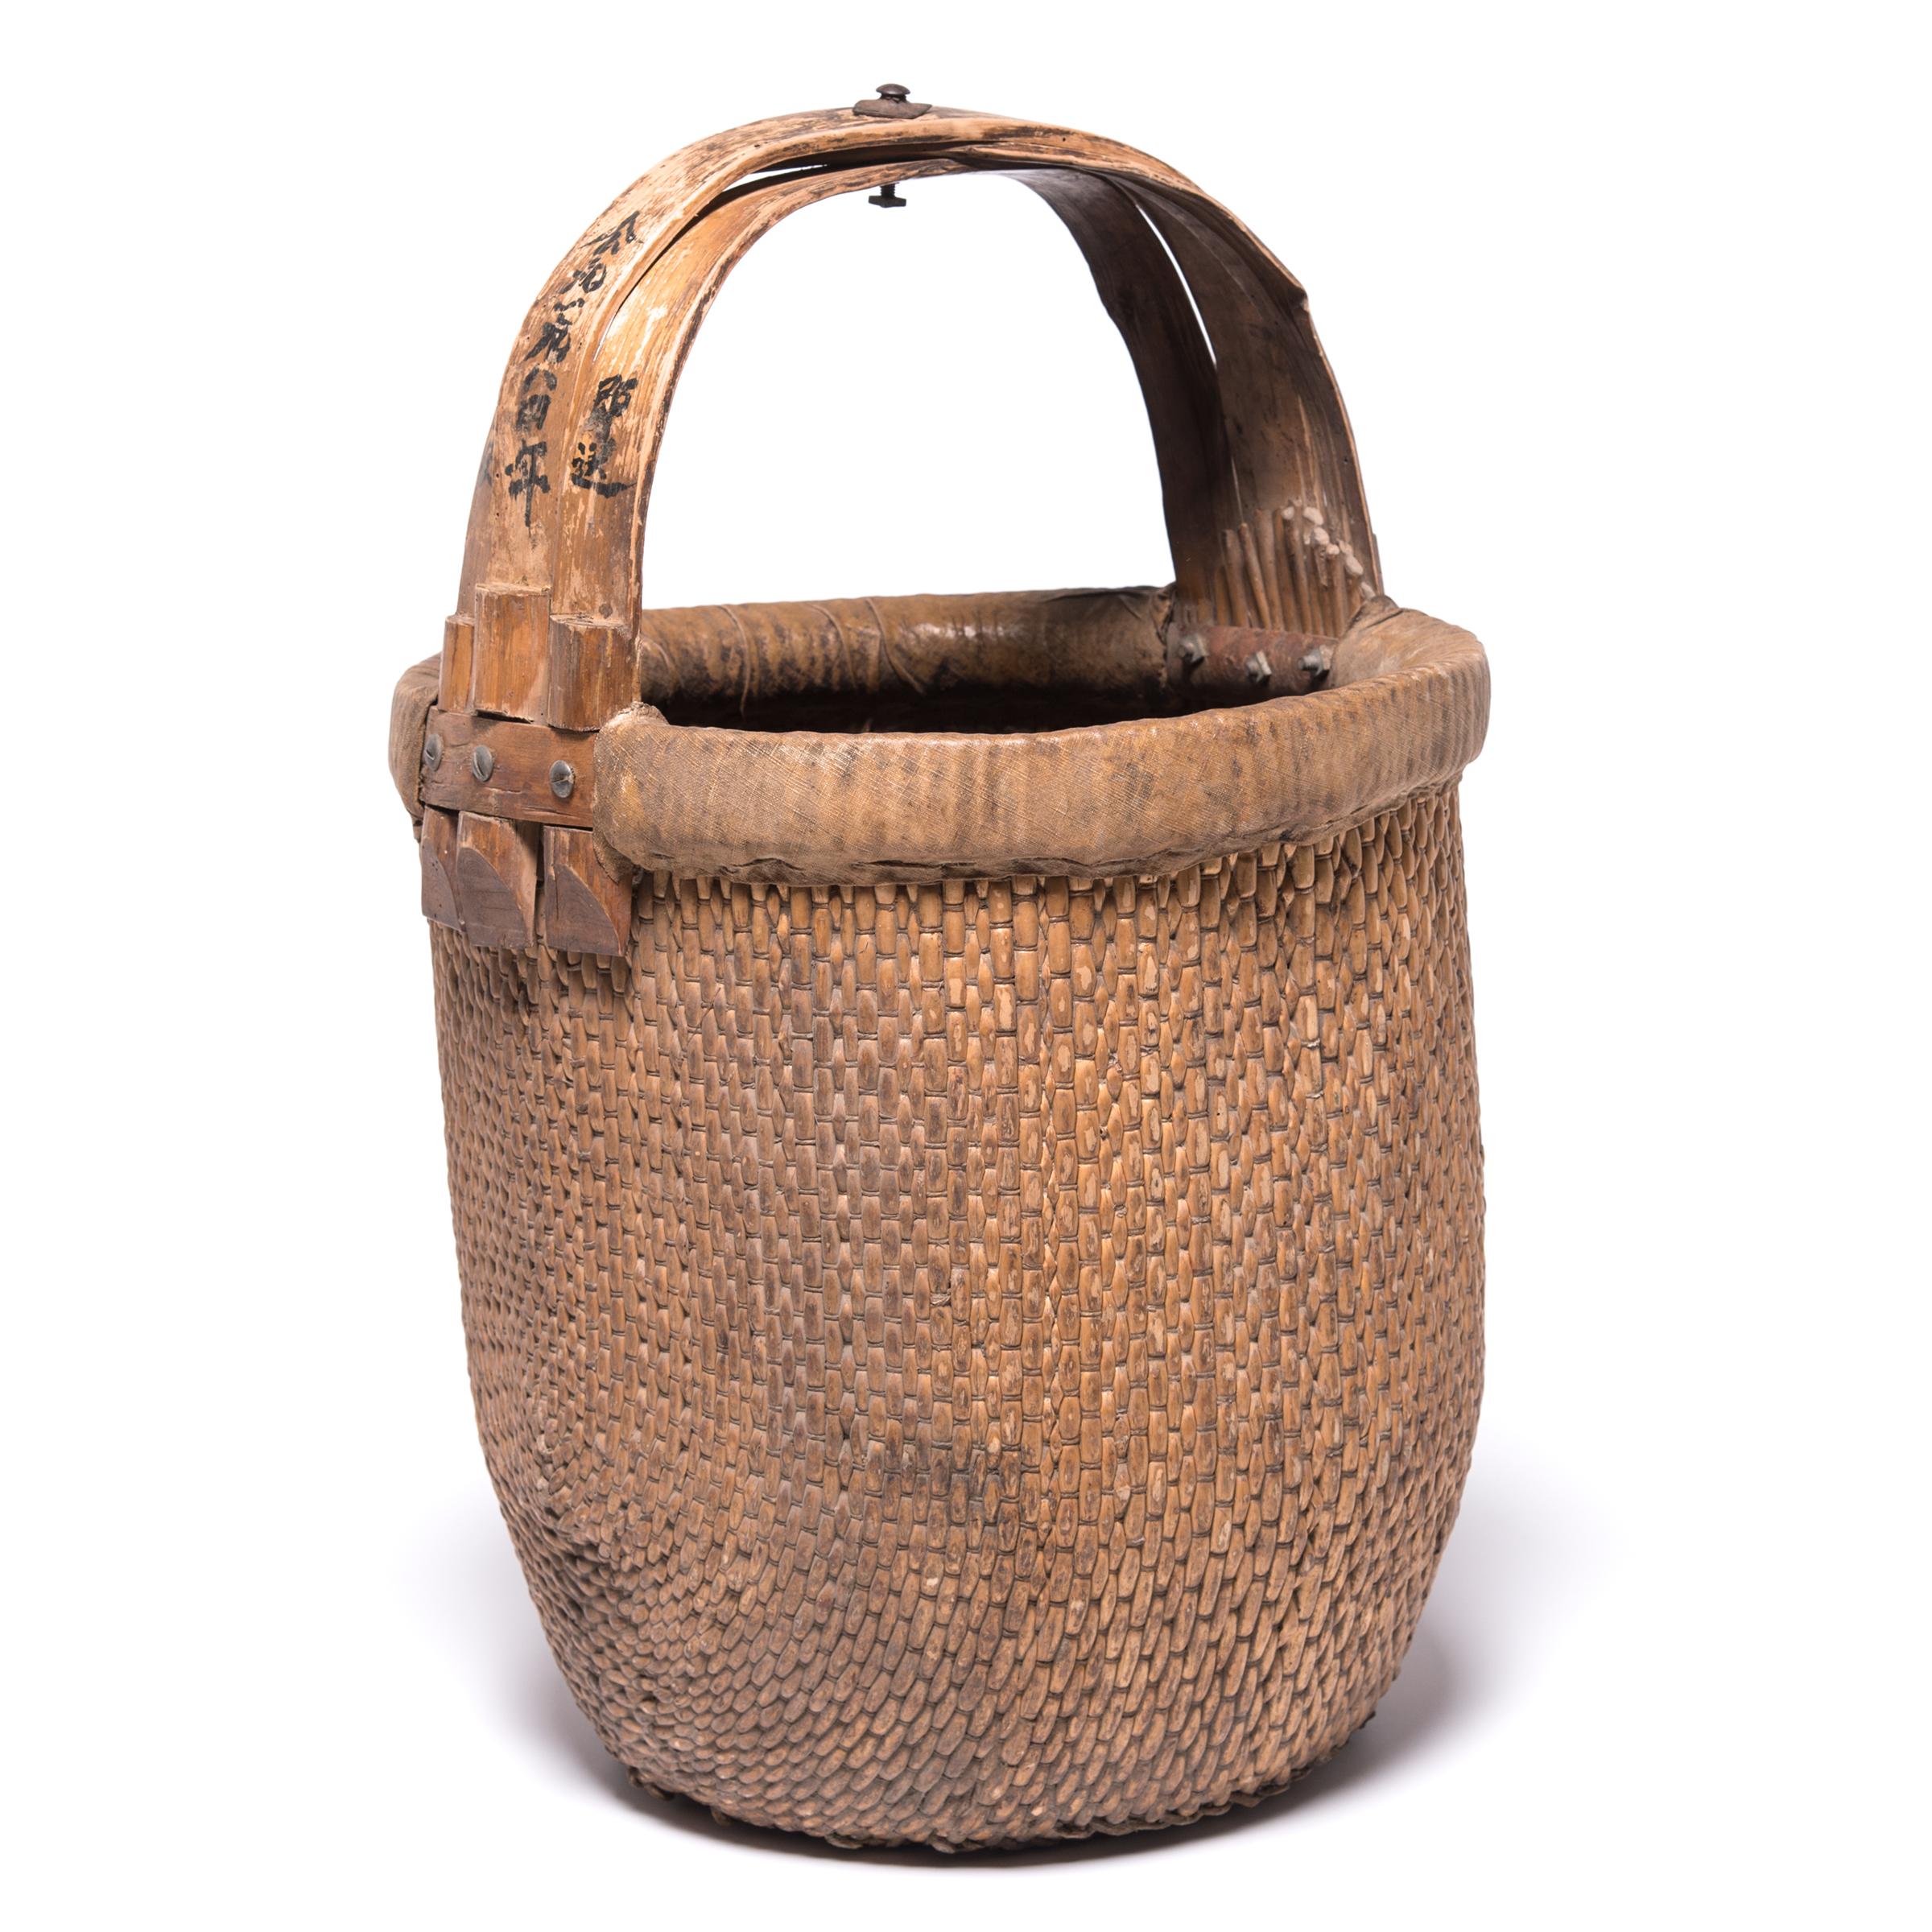 Hand-Woven Chinese Bent Handle Basket, circa 1850